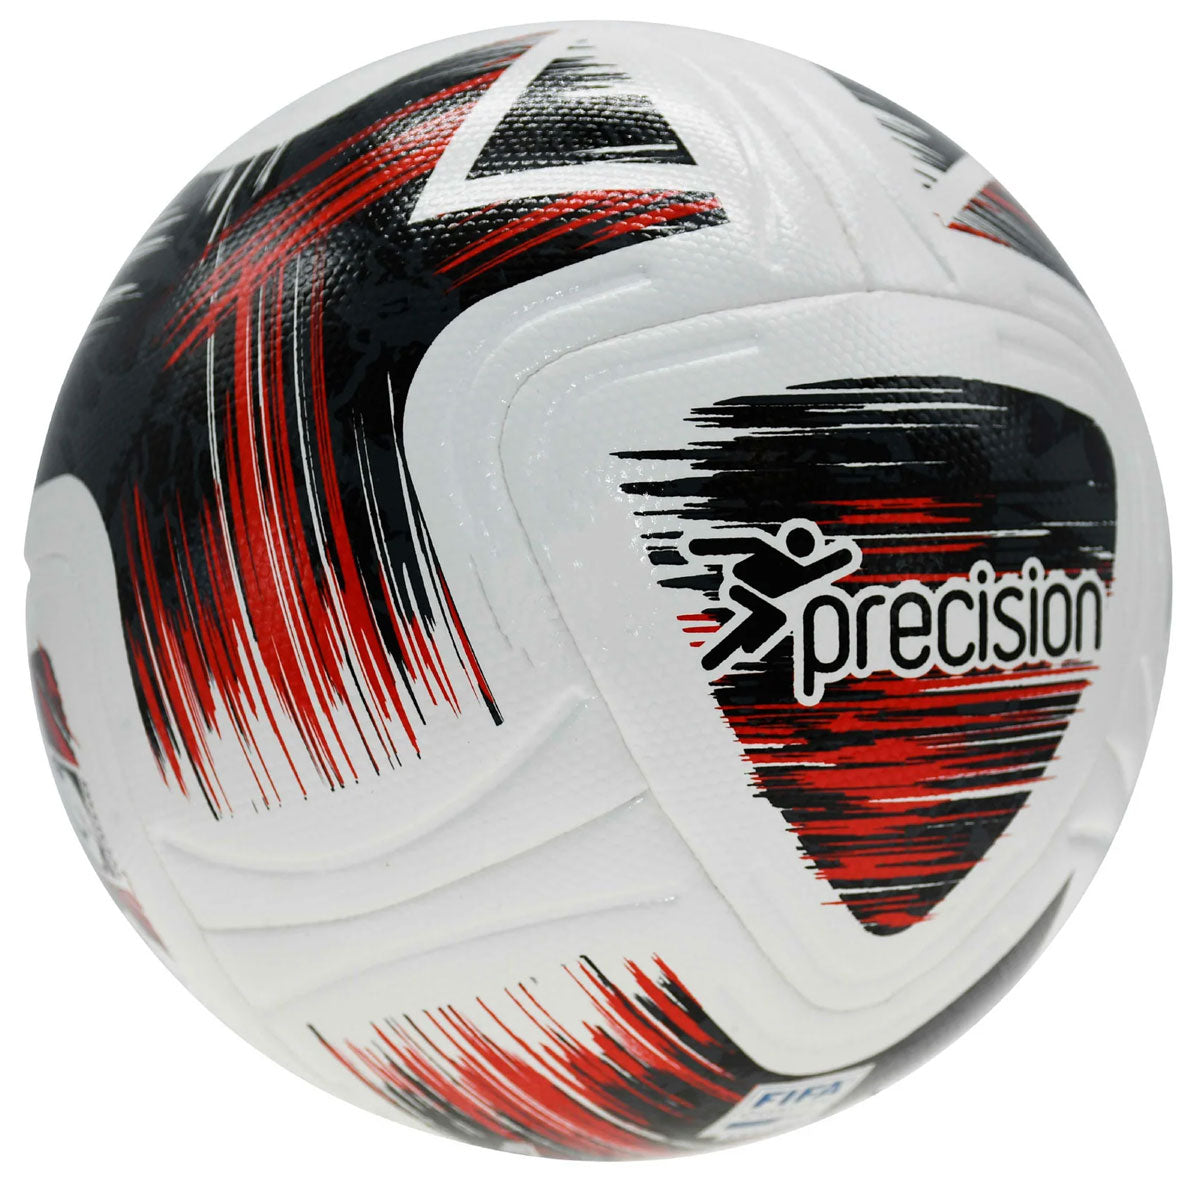 Precision Training Nueno Fifa Quality Pro Match Football - Size 5 - White/Black/Red